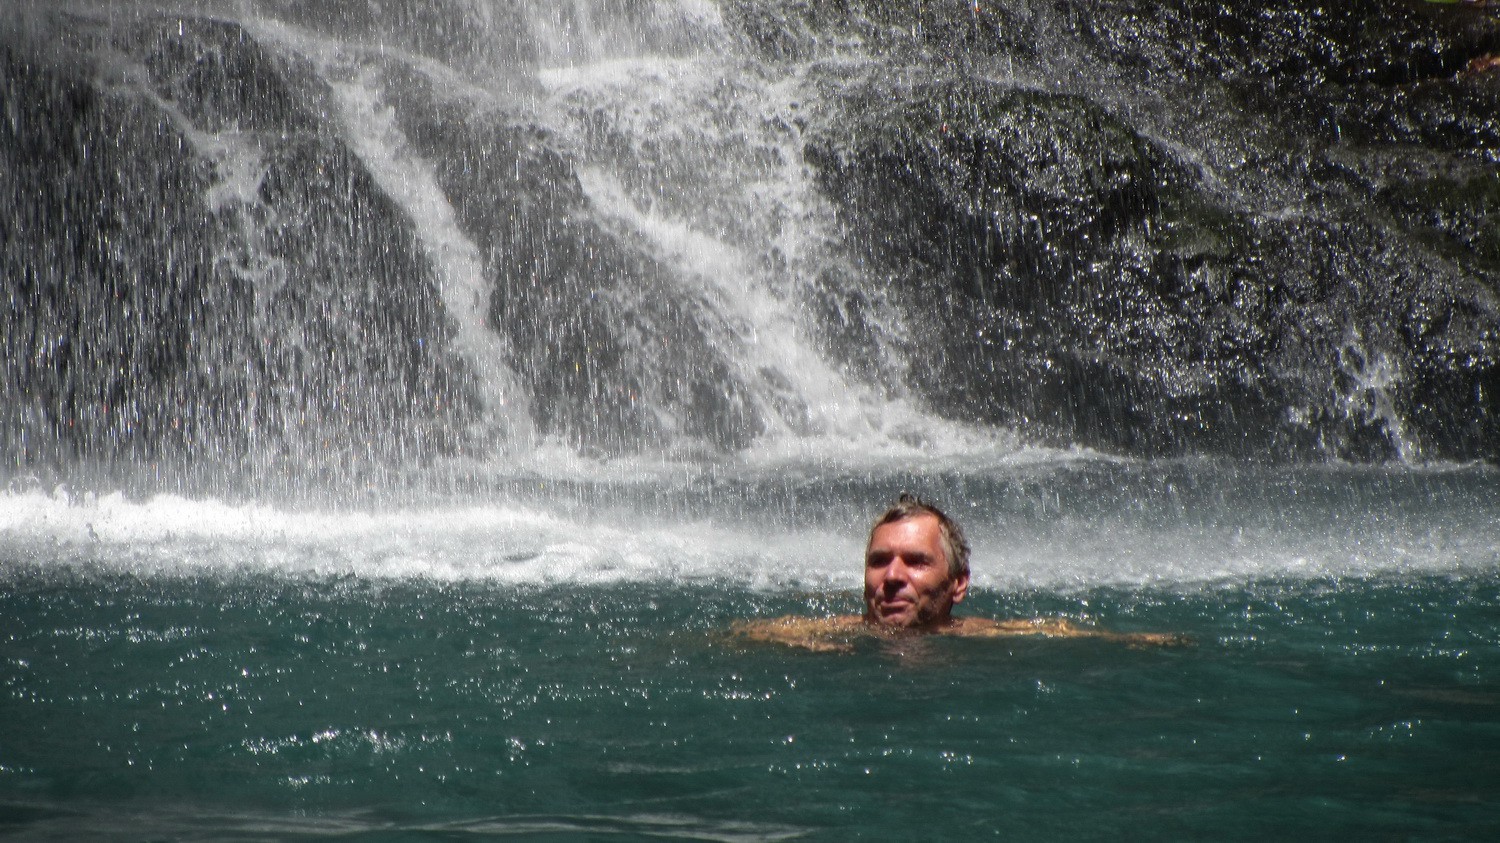 Alfred enjoying the refreshing water of La Cangreja